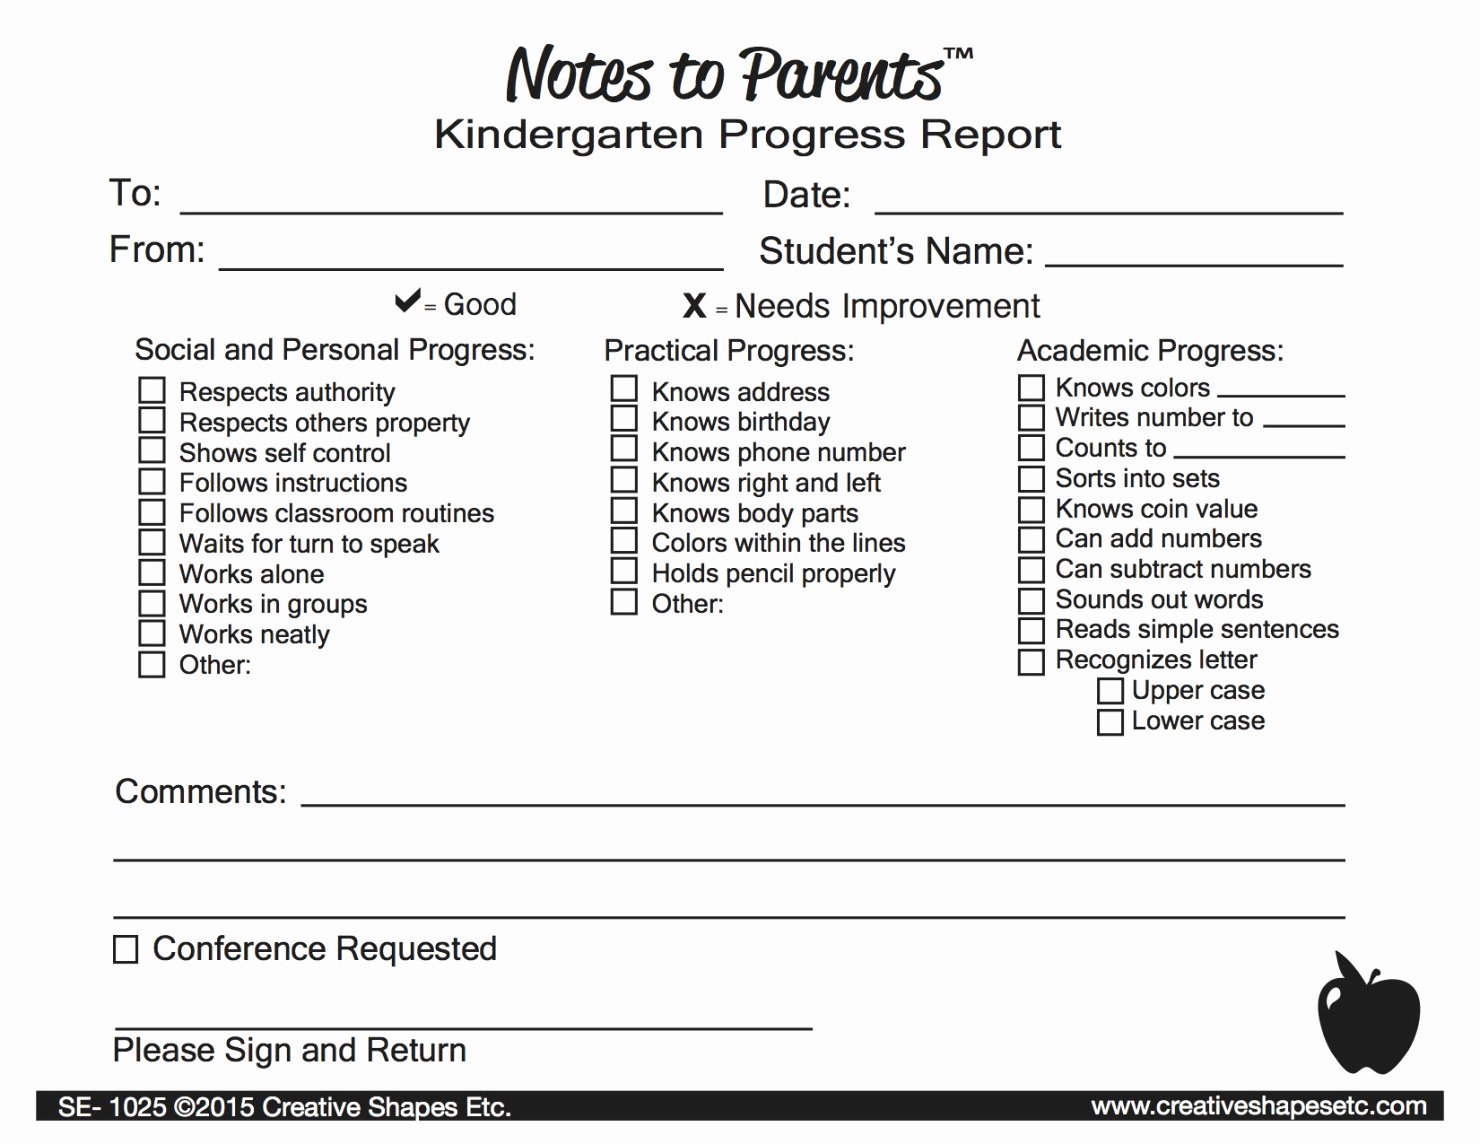 Preschool Progress Reports Templates Beautiful Creative Shapes Notes to Parents Kindergarten Progress